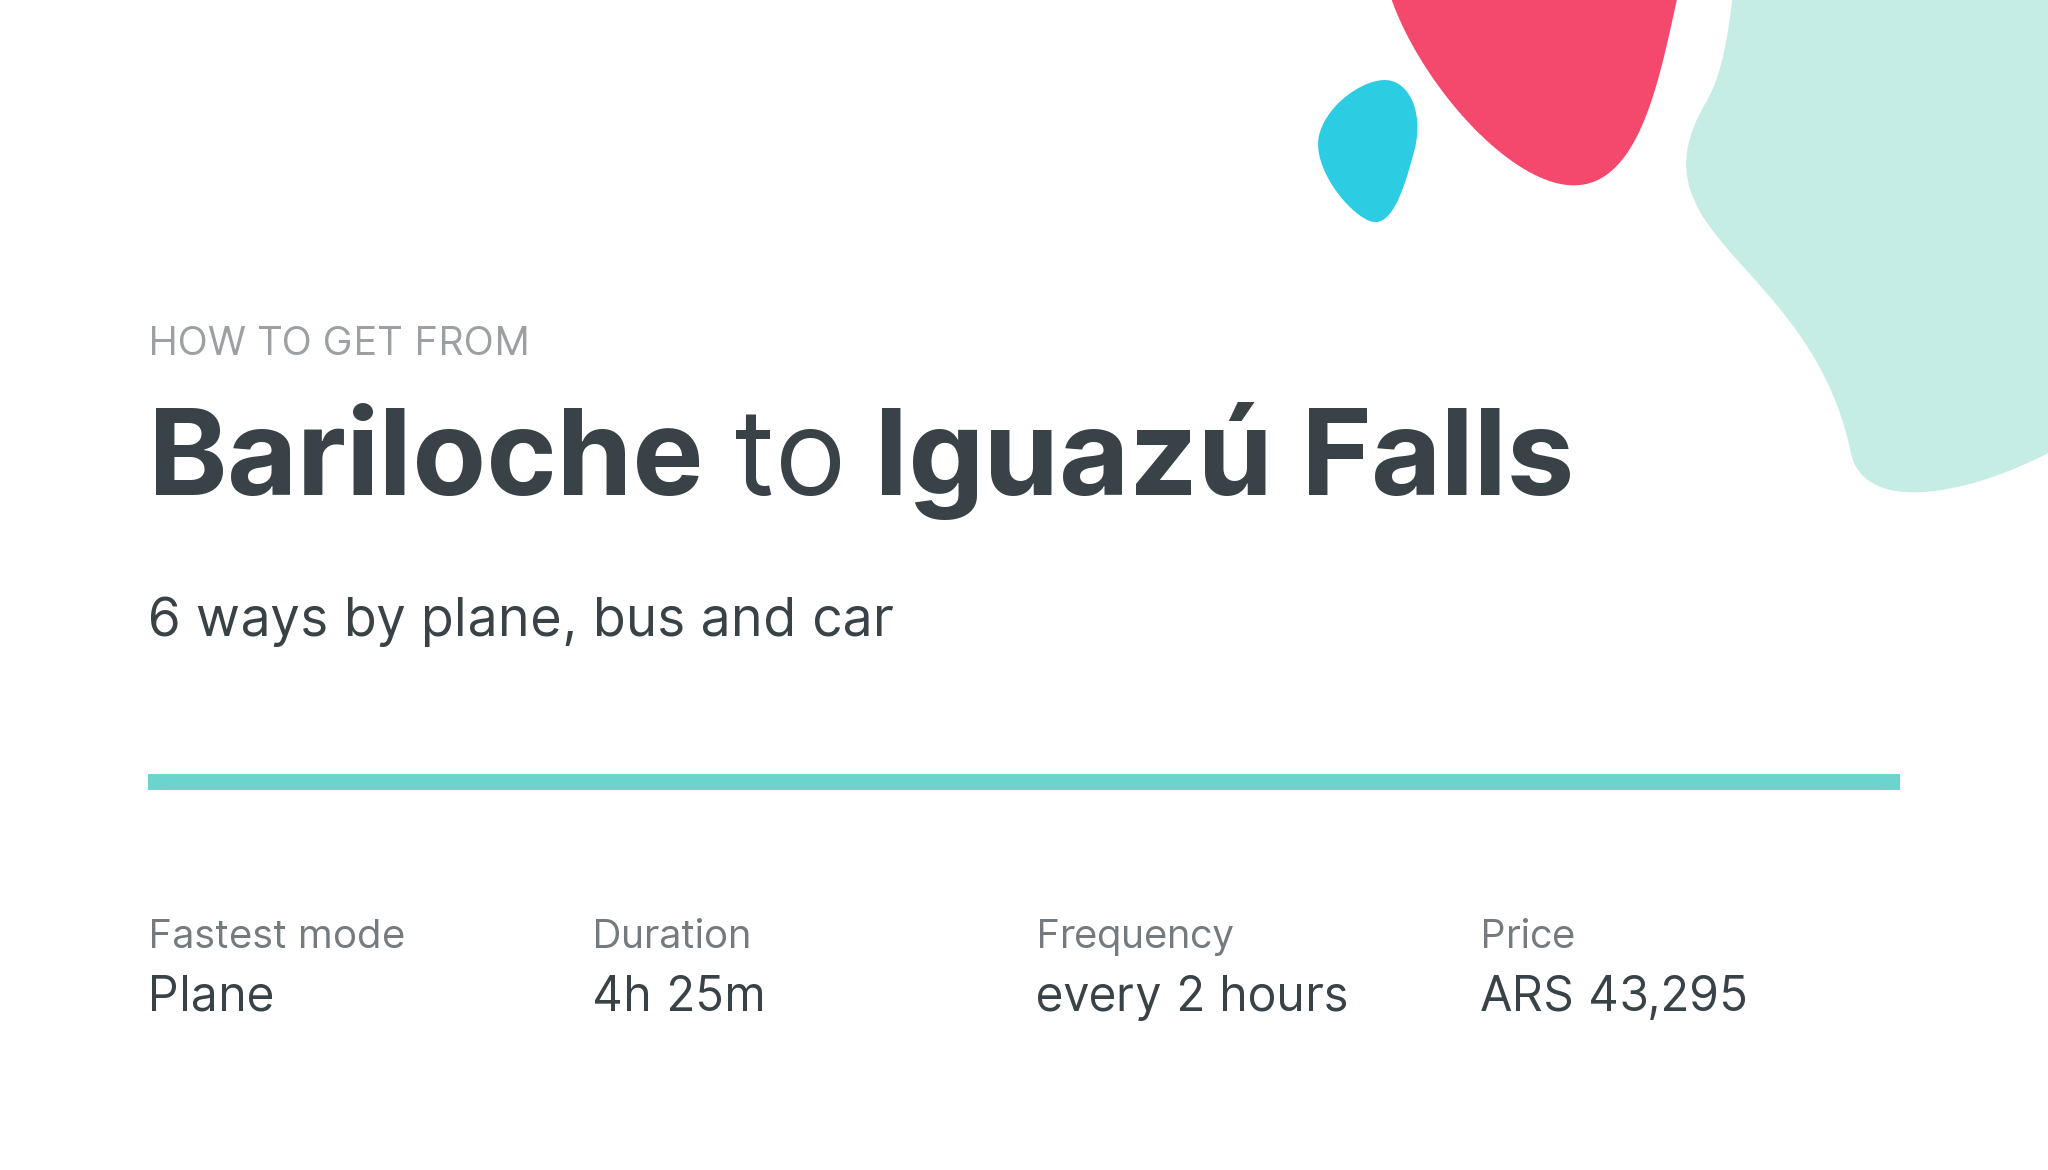 How do I get from Bariloche to Iguazú Falls